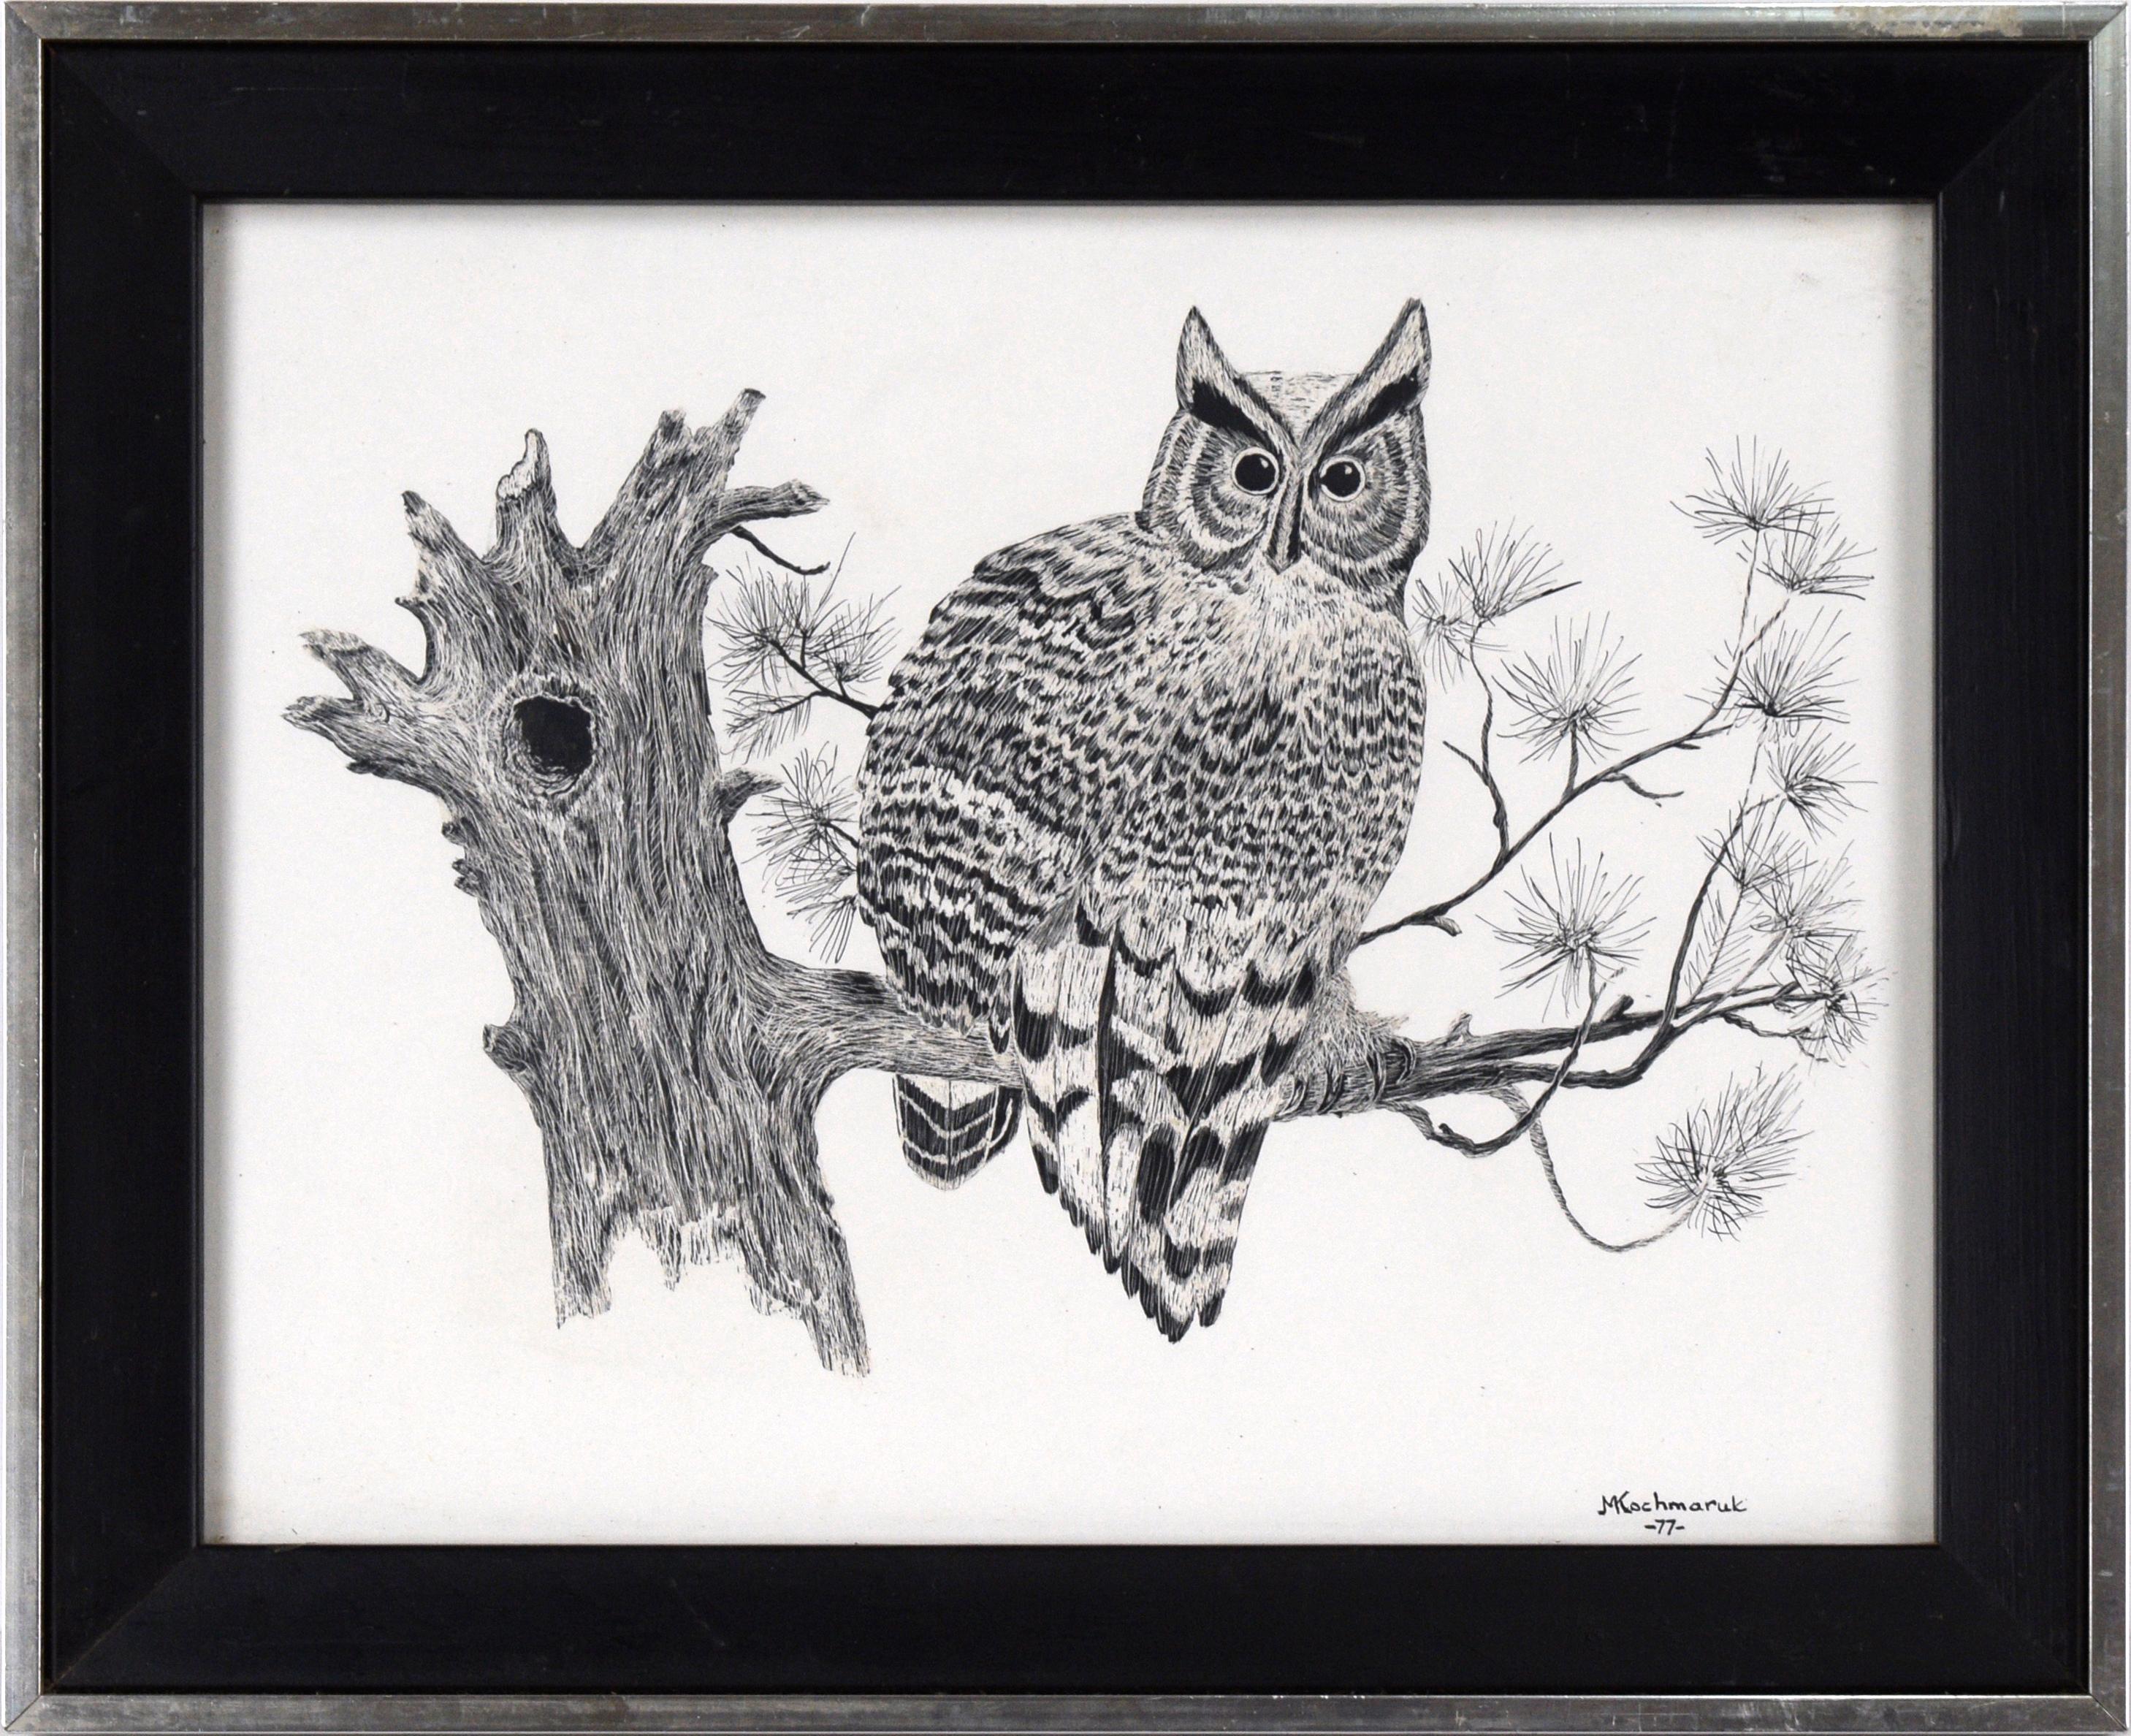 M. Kochmaruk Animal Art - Great Horned Owl Sitting on a Branch - Illustration in Ink on Cardstock